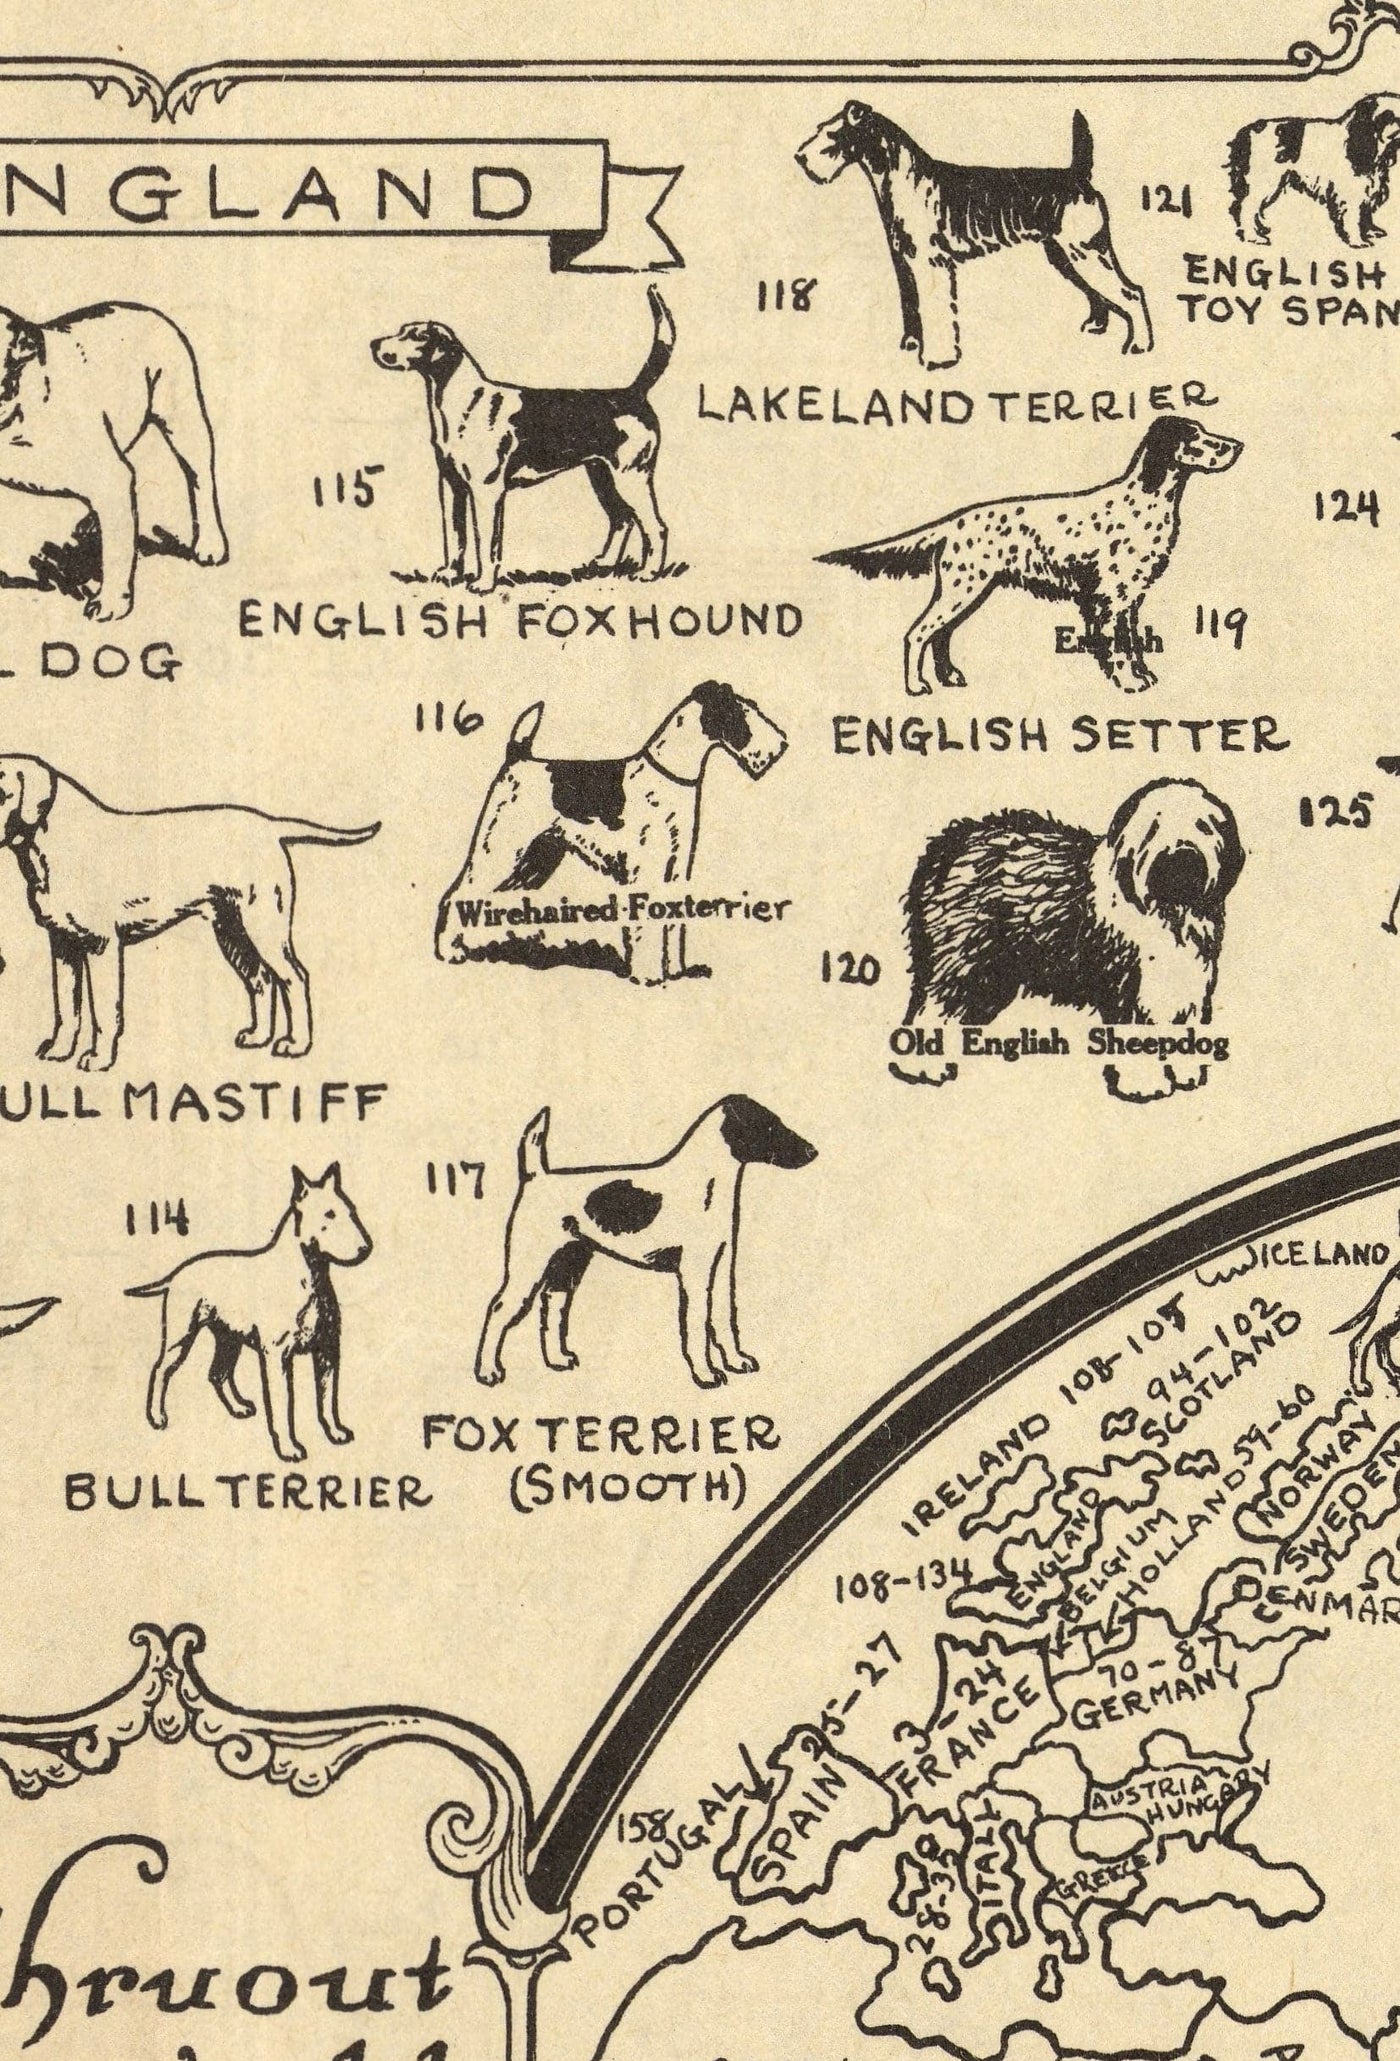 Mapa de perros antiguos, 1936 - Atlas mundial de razas - Terrier, Bulldog, Pug, Pastor alemán, Husky, Retriever, Perro pastor